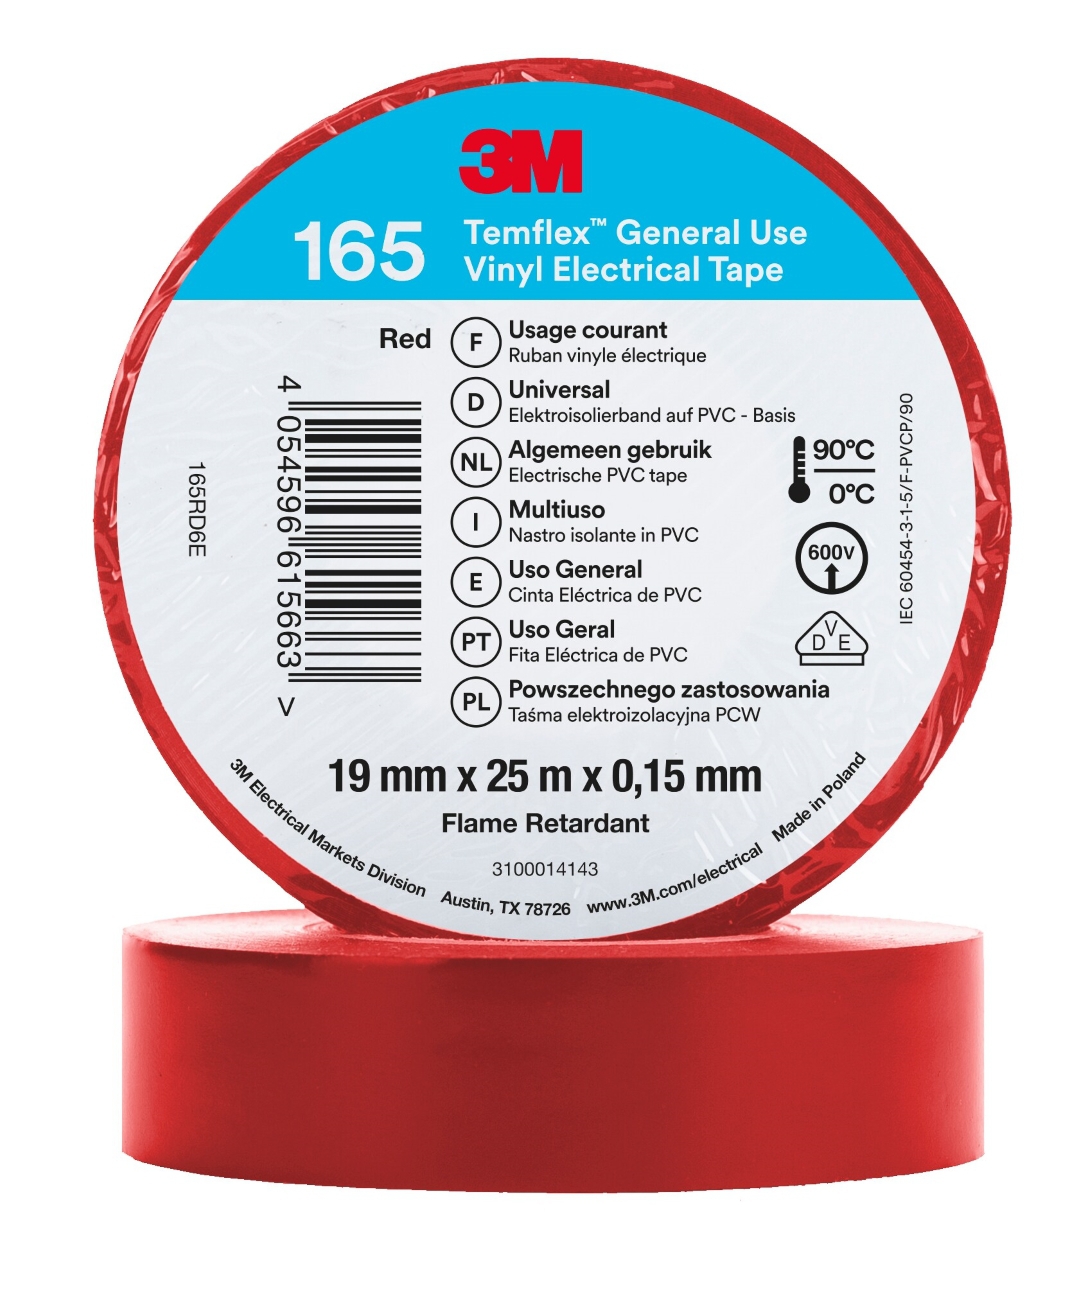 3M Temflex 165 vinyl electrical insulating tape, red, 19 mm x 25 m, 0.15 mm